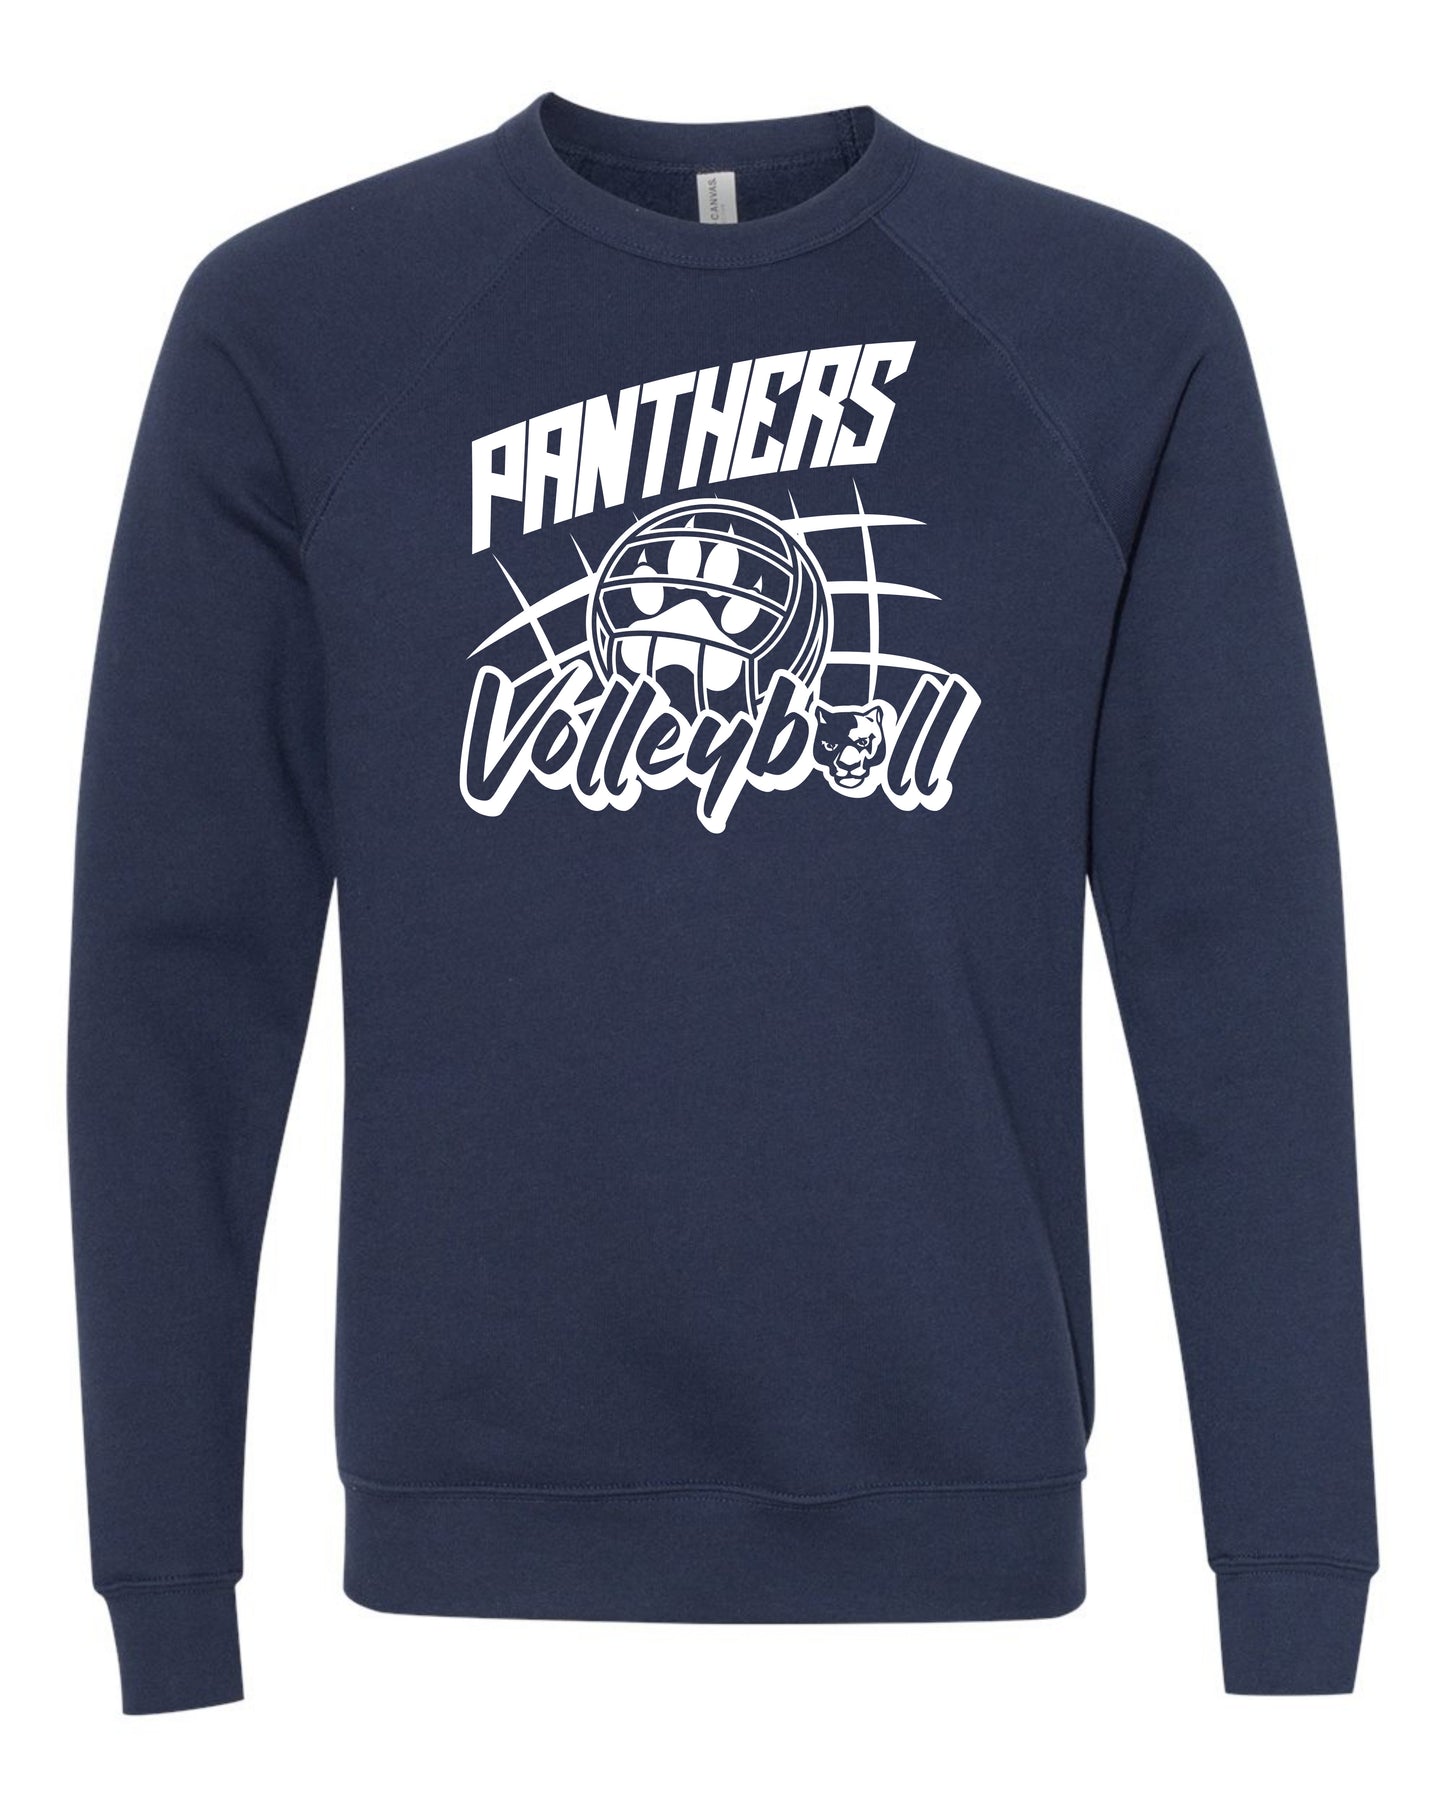 Panthers Volleyball Paw Ball - Adult Sweatshirt